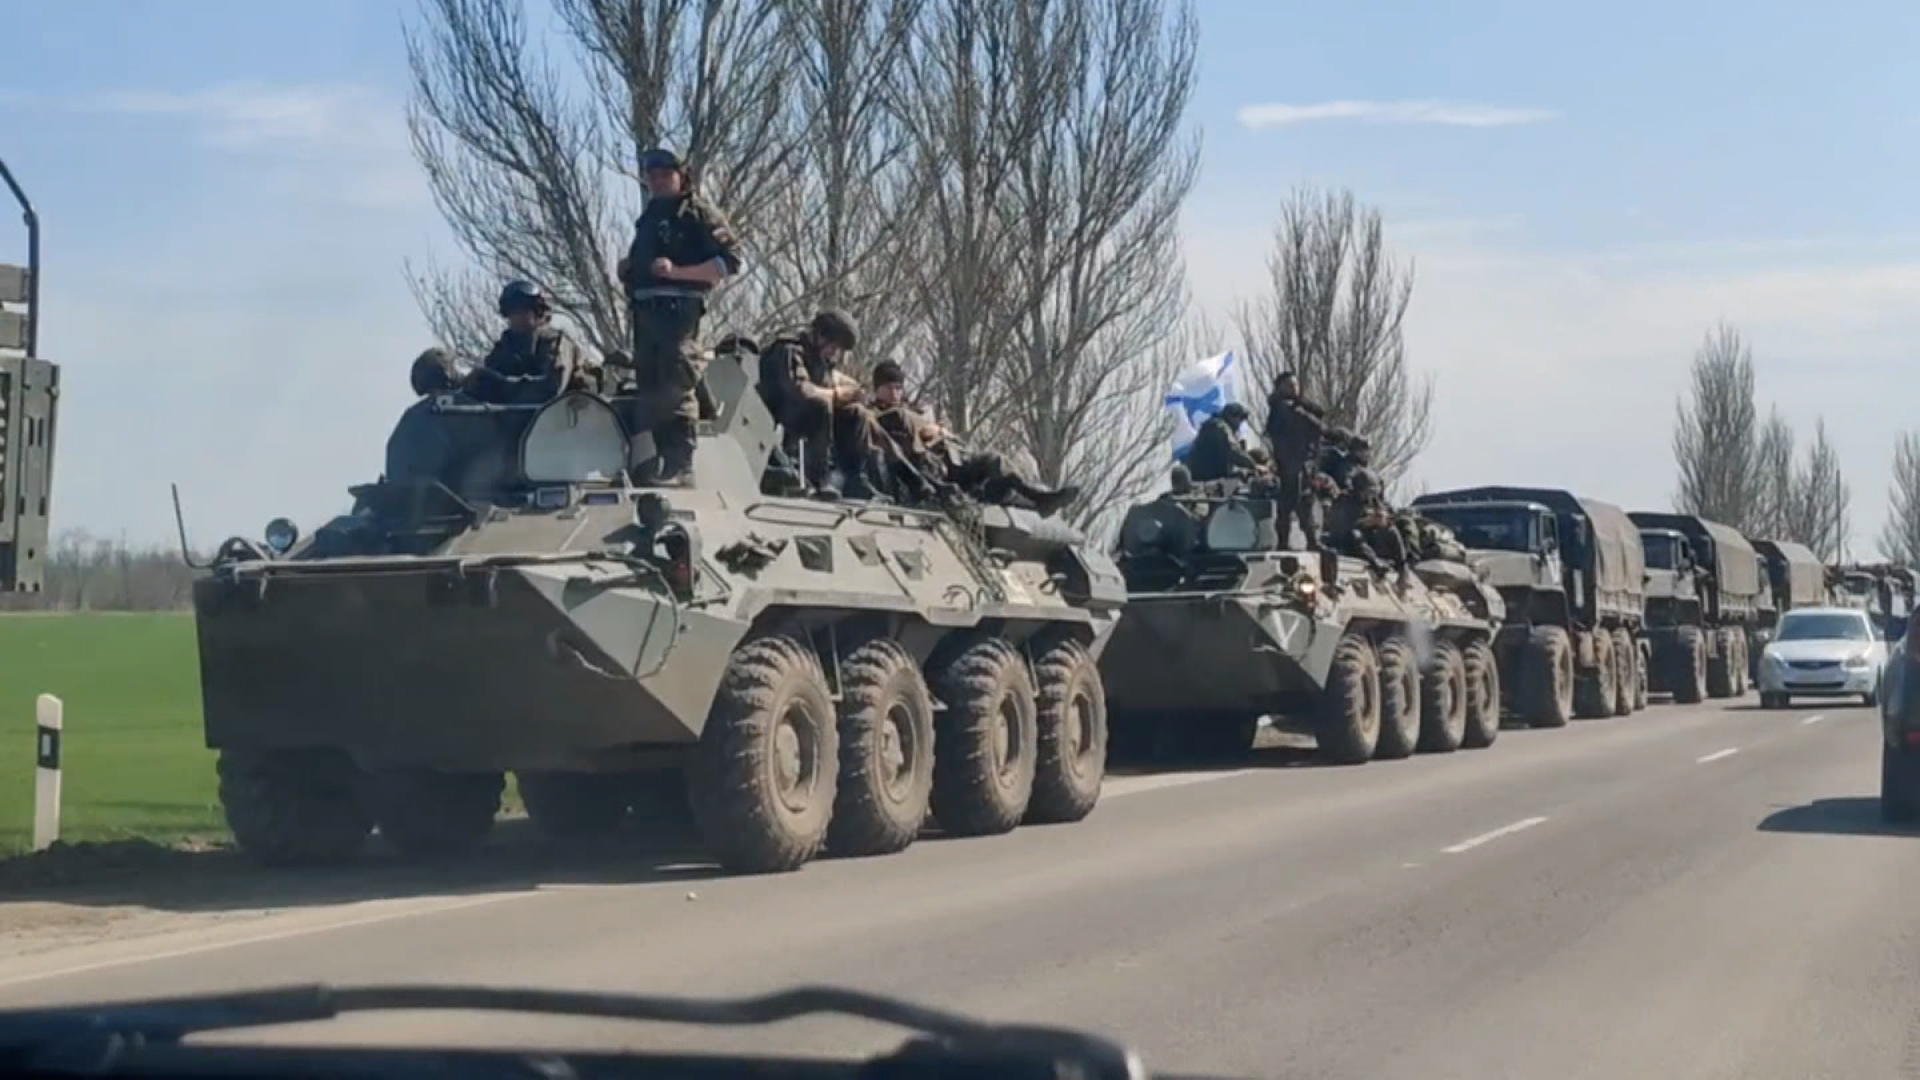 A large column of Russian military vehicles is seen near Matveev Kurgan, a settlement in Russia’s Rostov region.